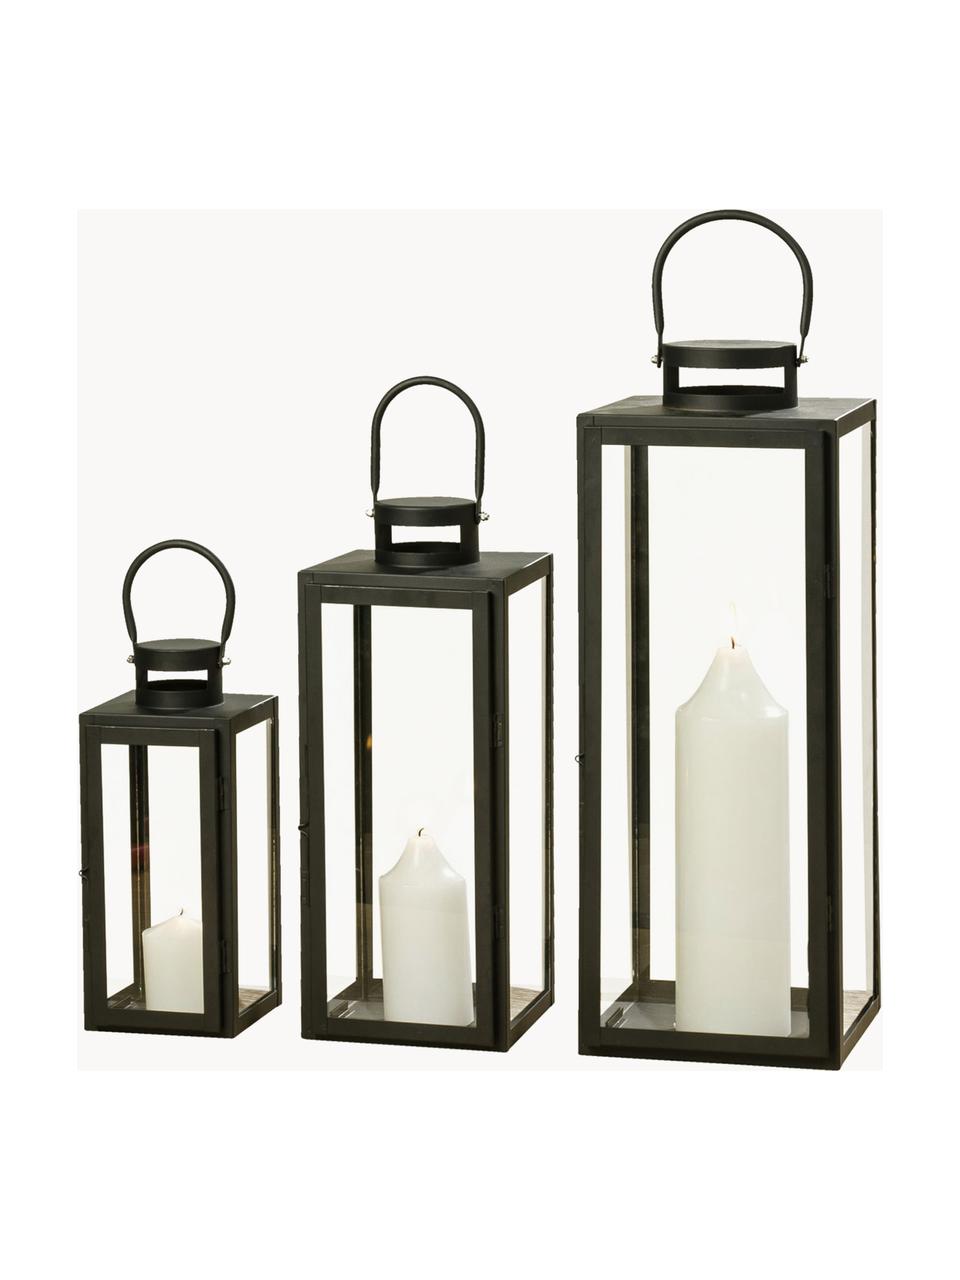 Komplet latarenek ze szkła Arana, 3 elem., Szkło, metal, Czarny, transparentny, Komplet z różnymi rozmiarami